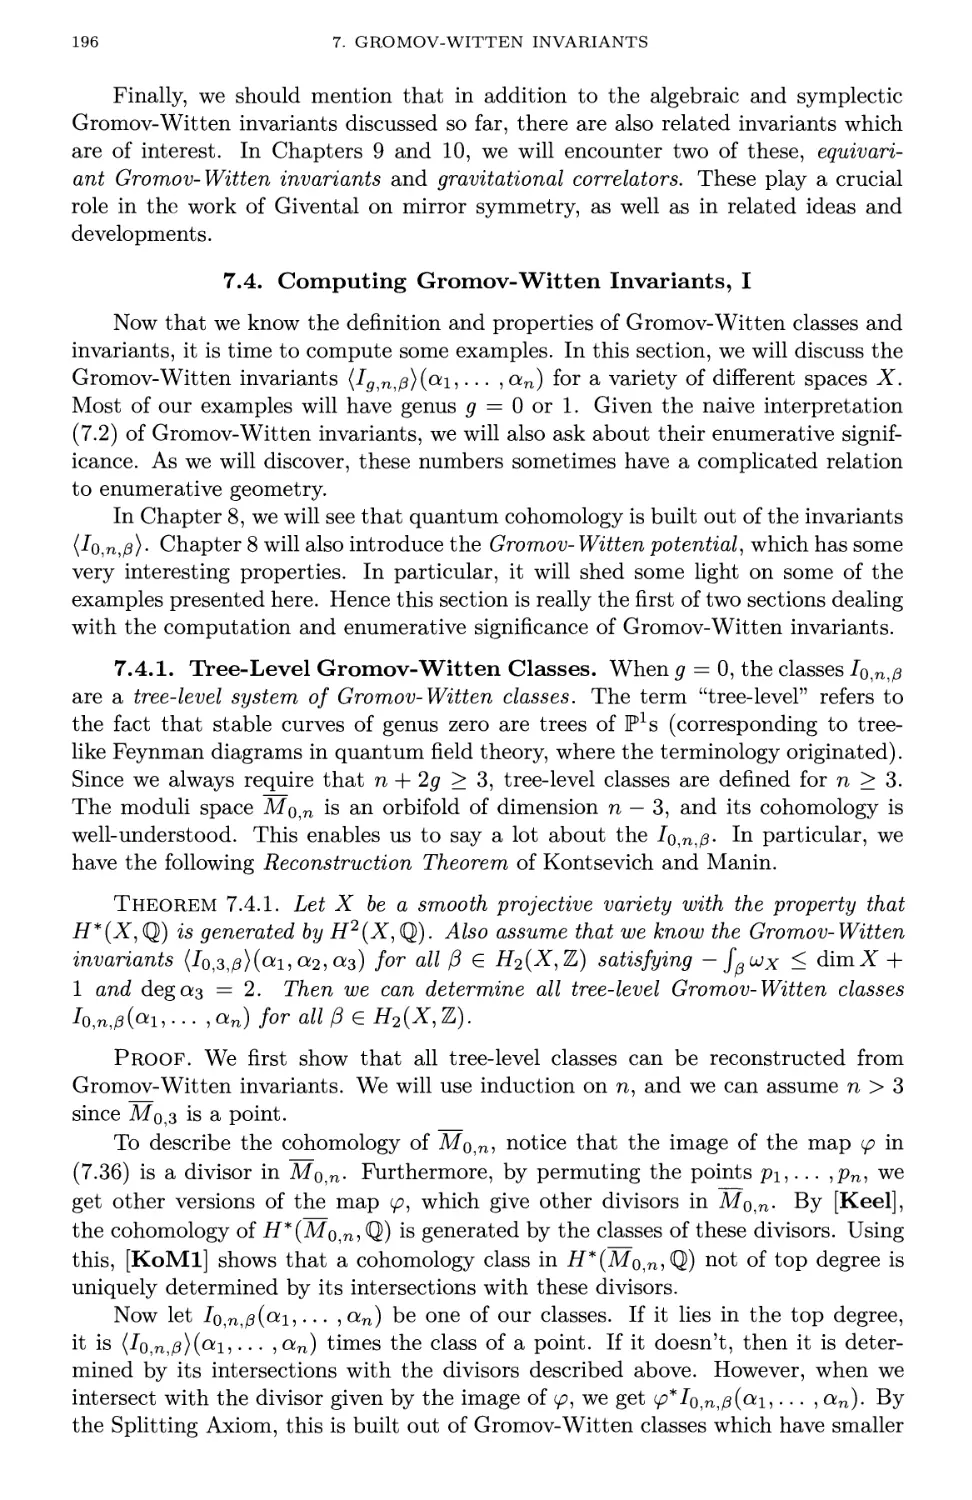 7.4. Computing Gromov-Witten Invariants, I